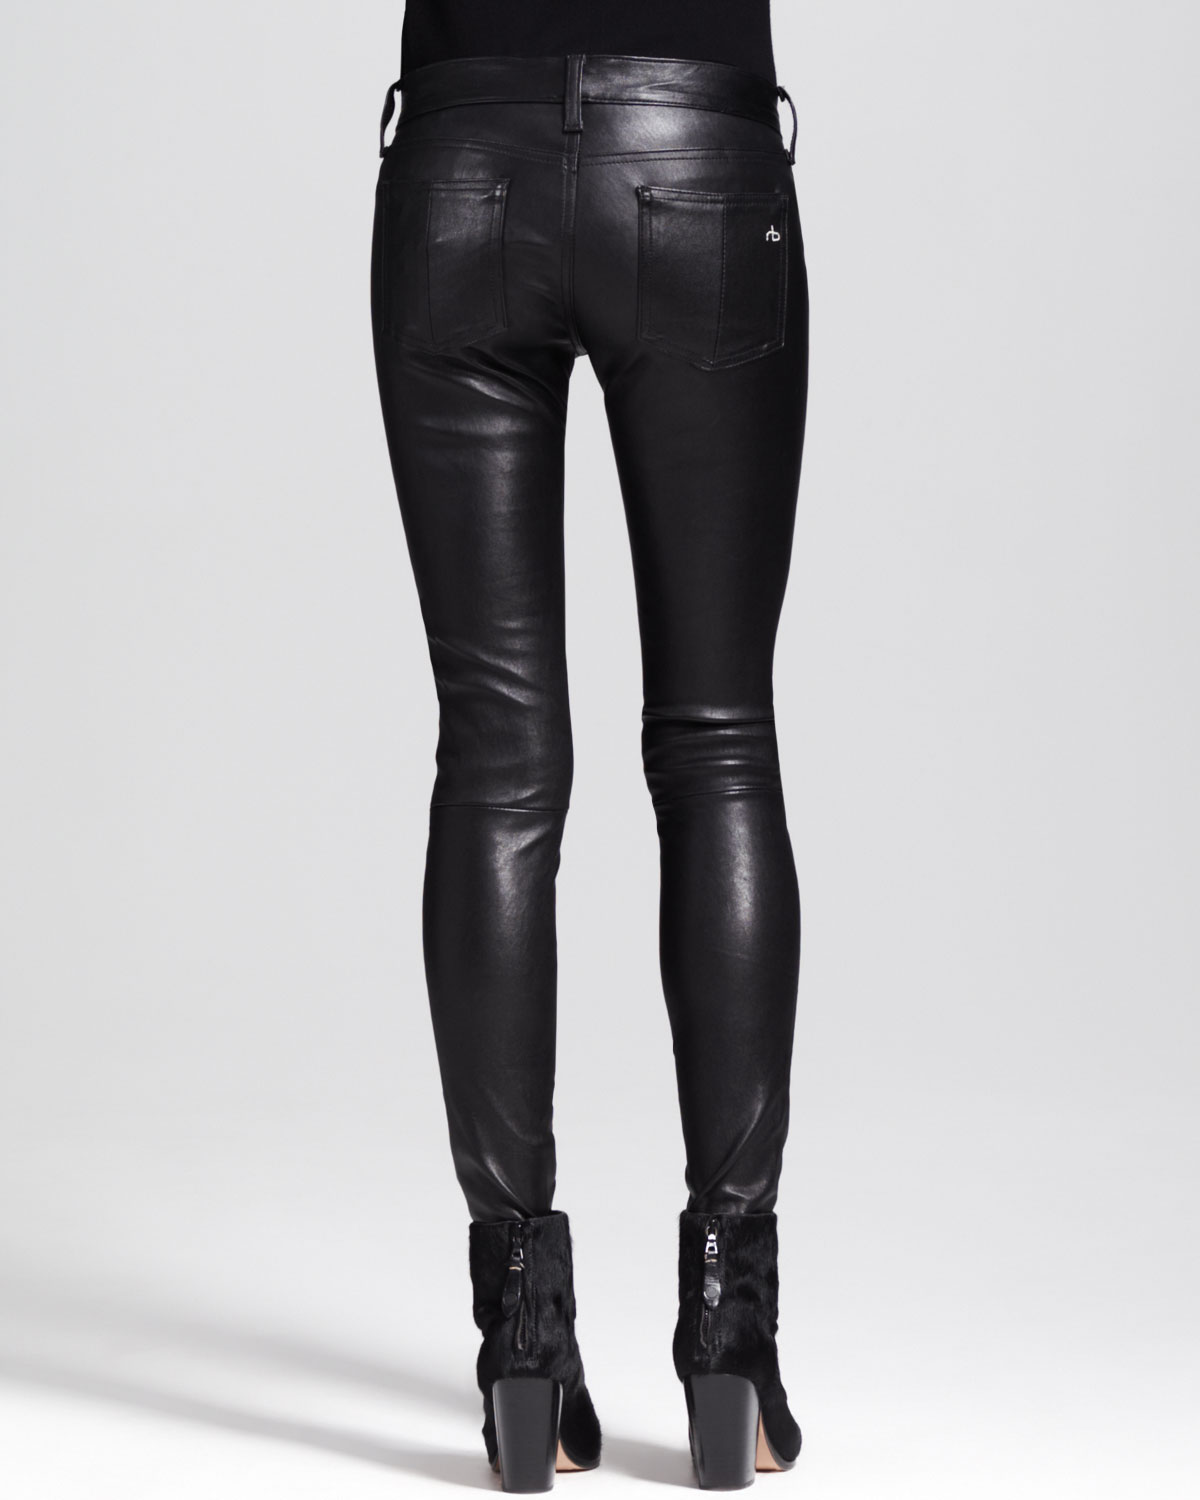 Lyst - Rag & Bone The Skinny Leather Jeans Black in Black